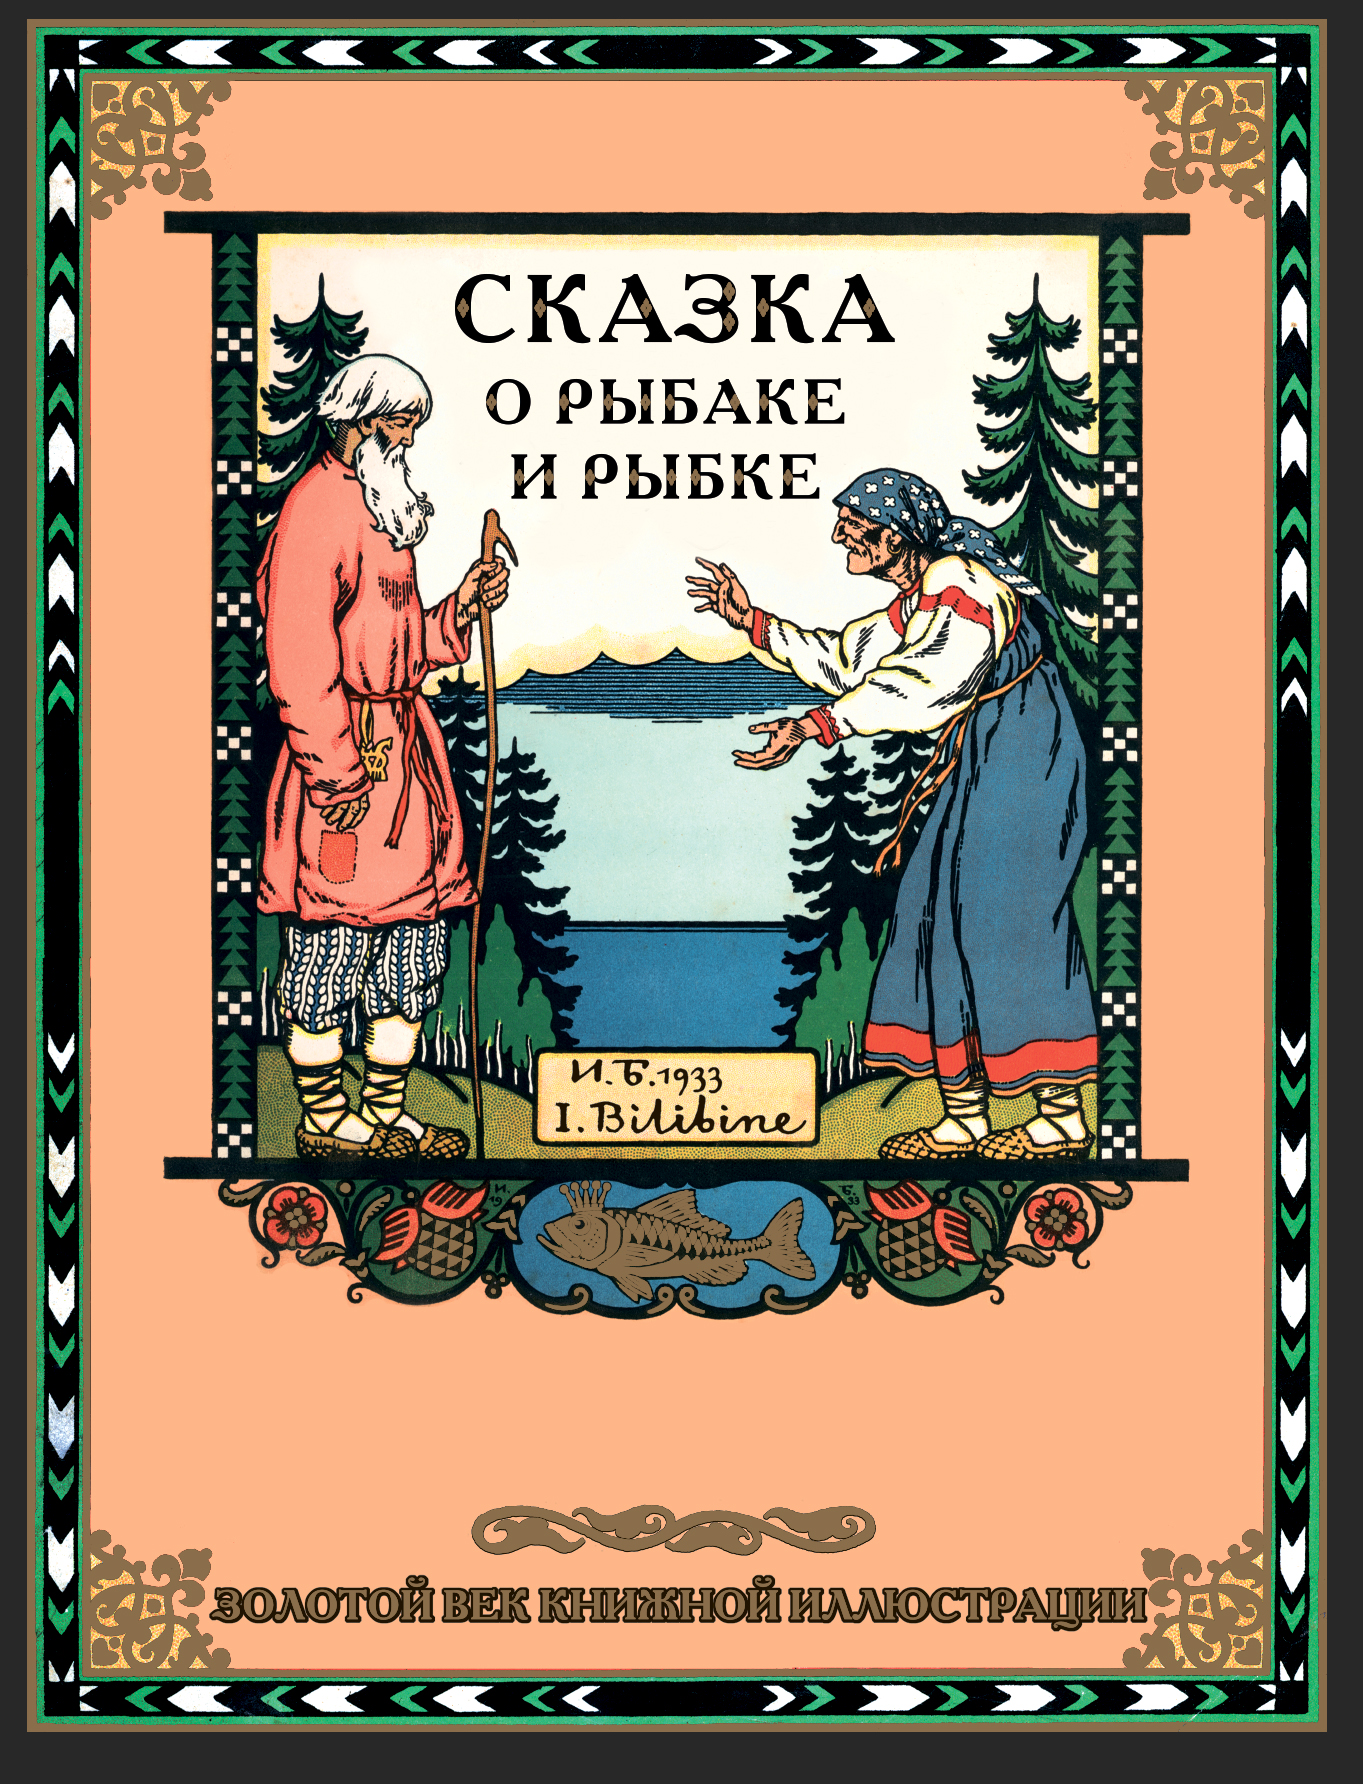 Пушкин Золотая рыбка книга